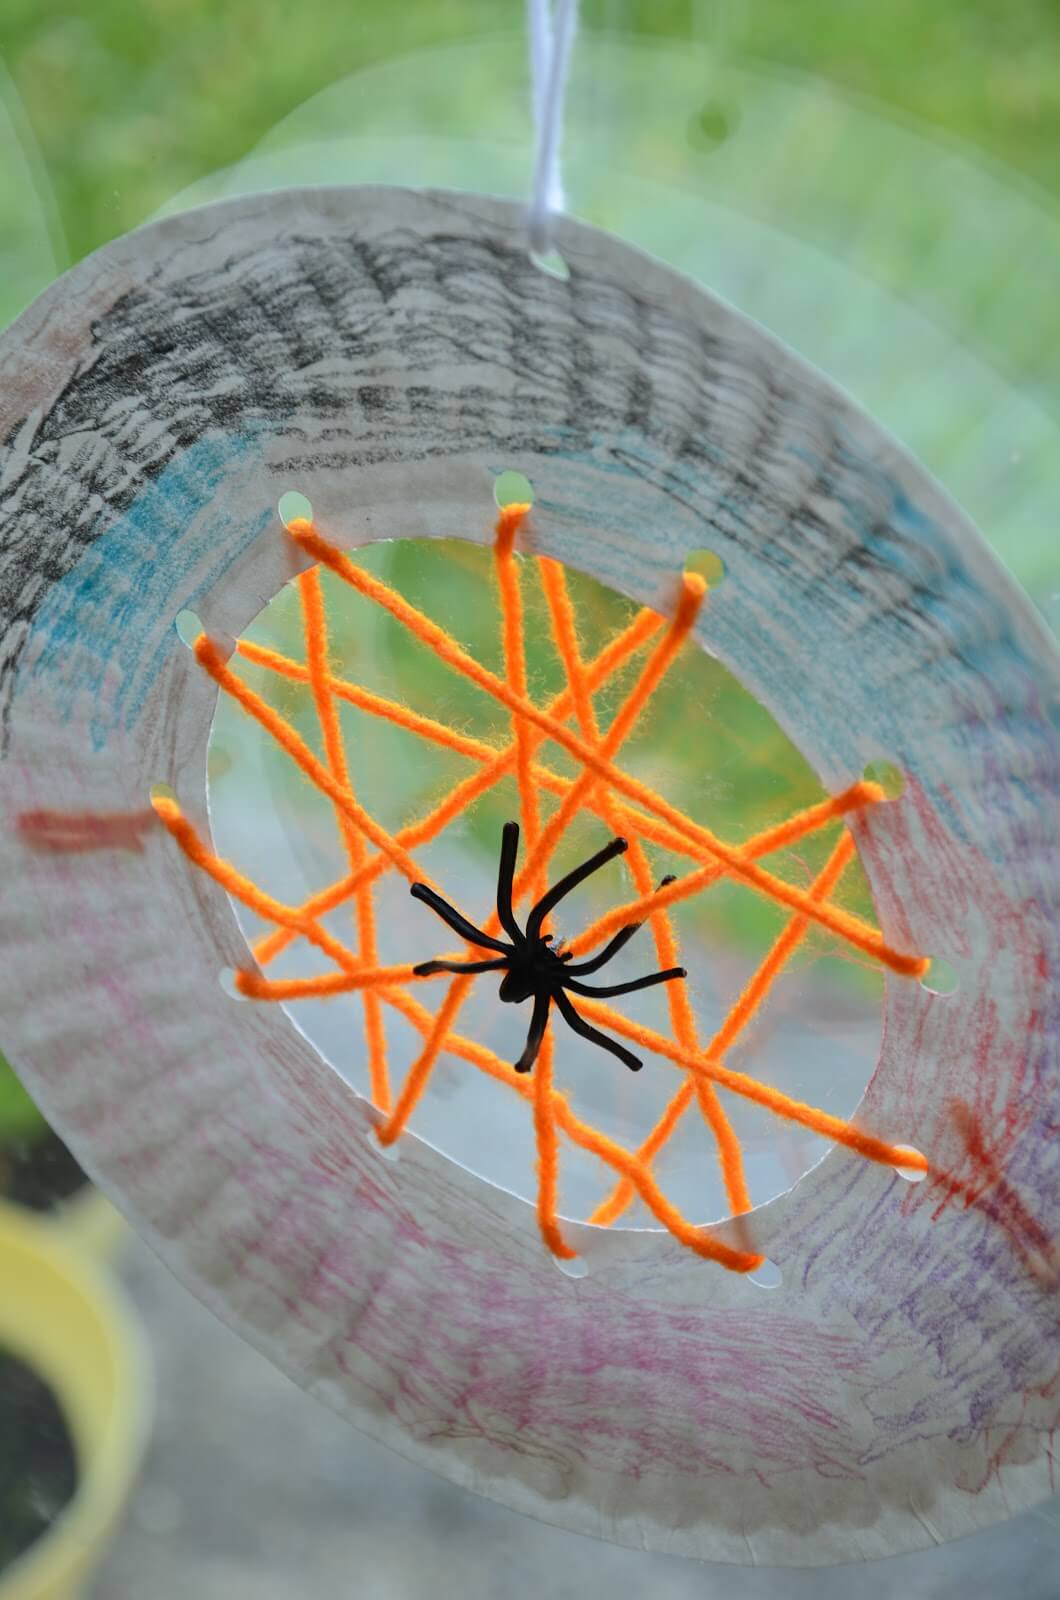 Paper Plate Spider Web Activity | Fun & Creative DIY Halloween Crafts for Kids